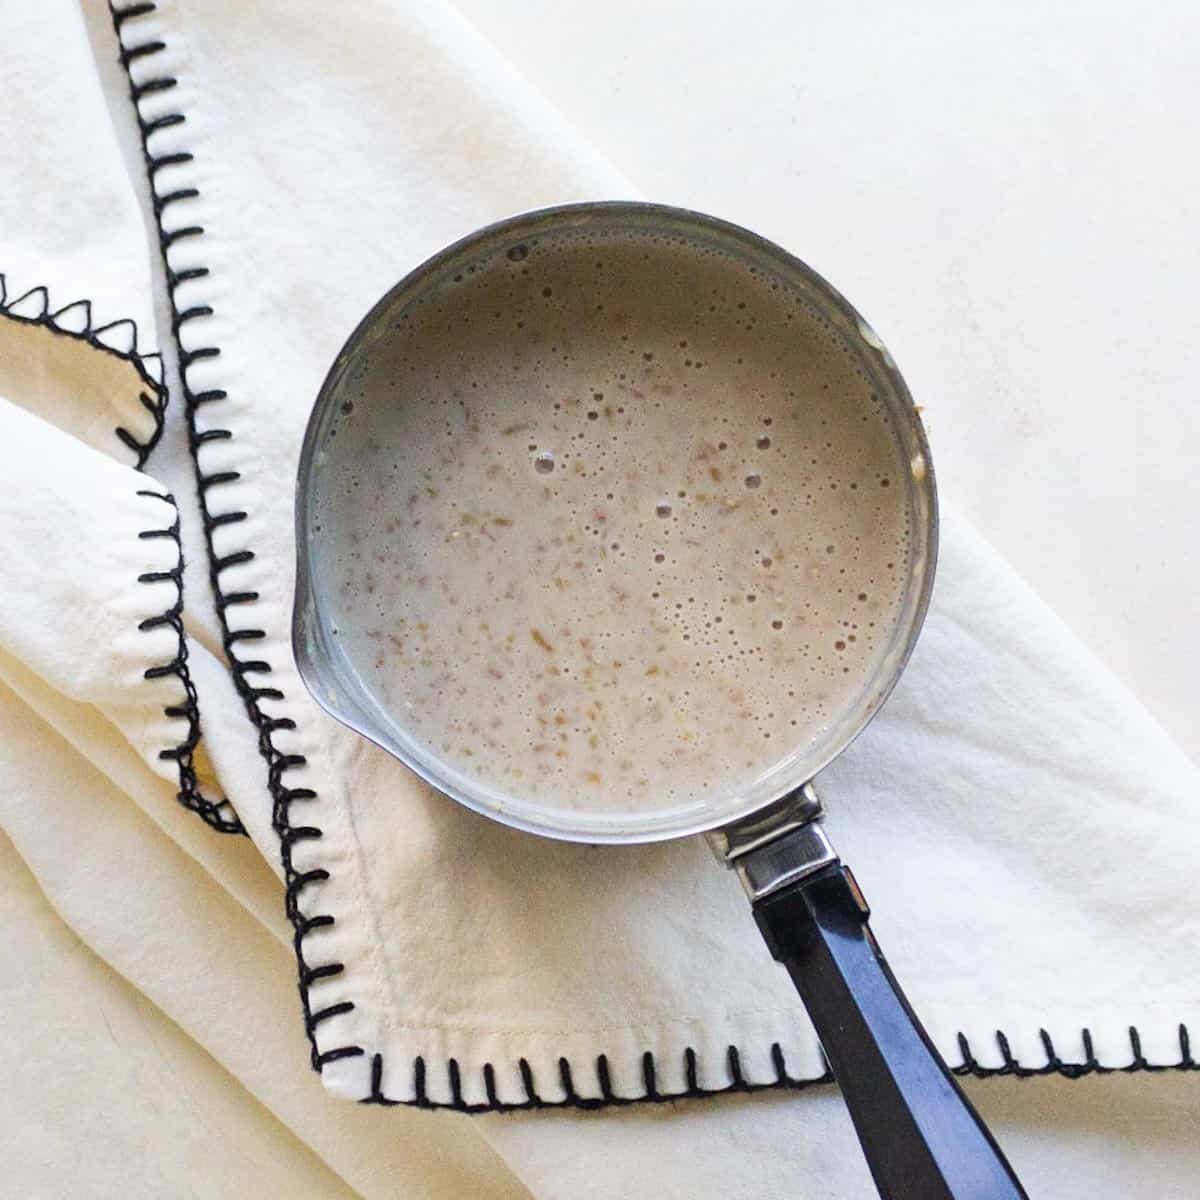 Cracked wheat and milk porridge in a pan.